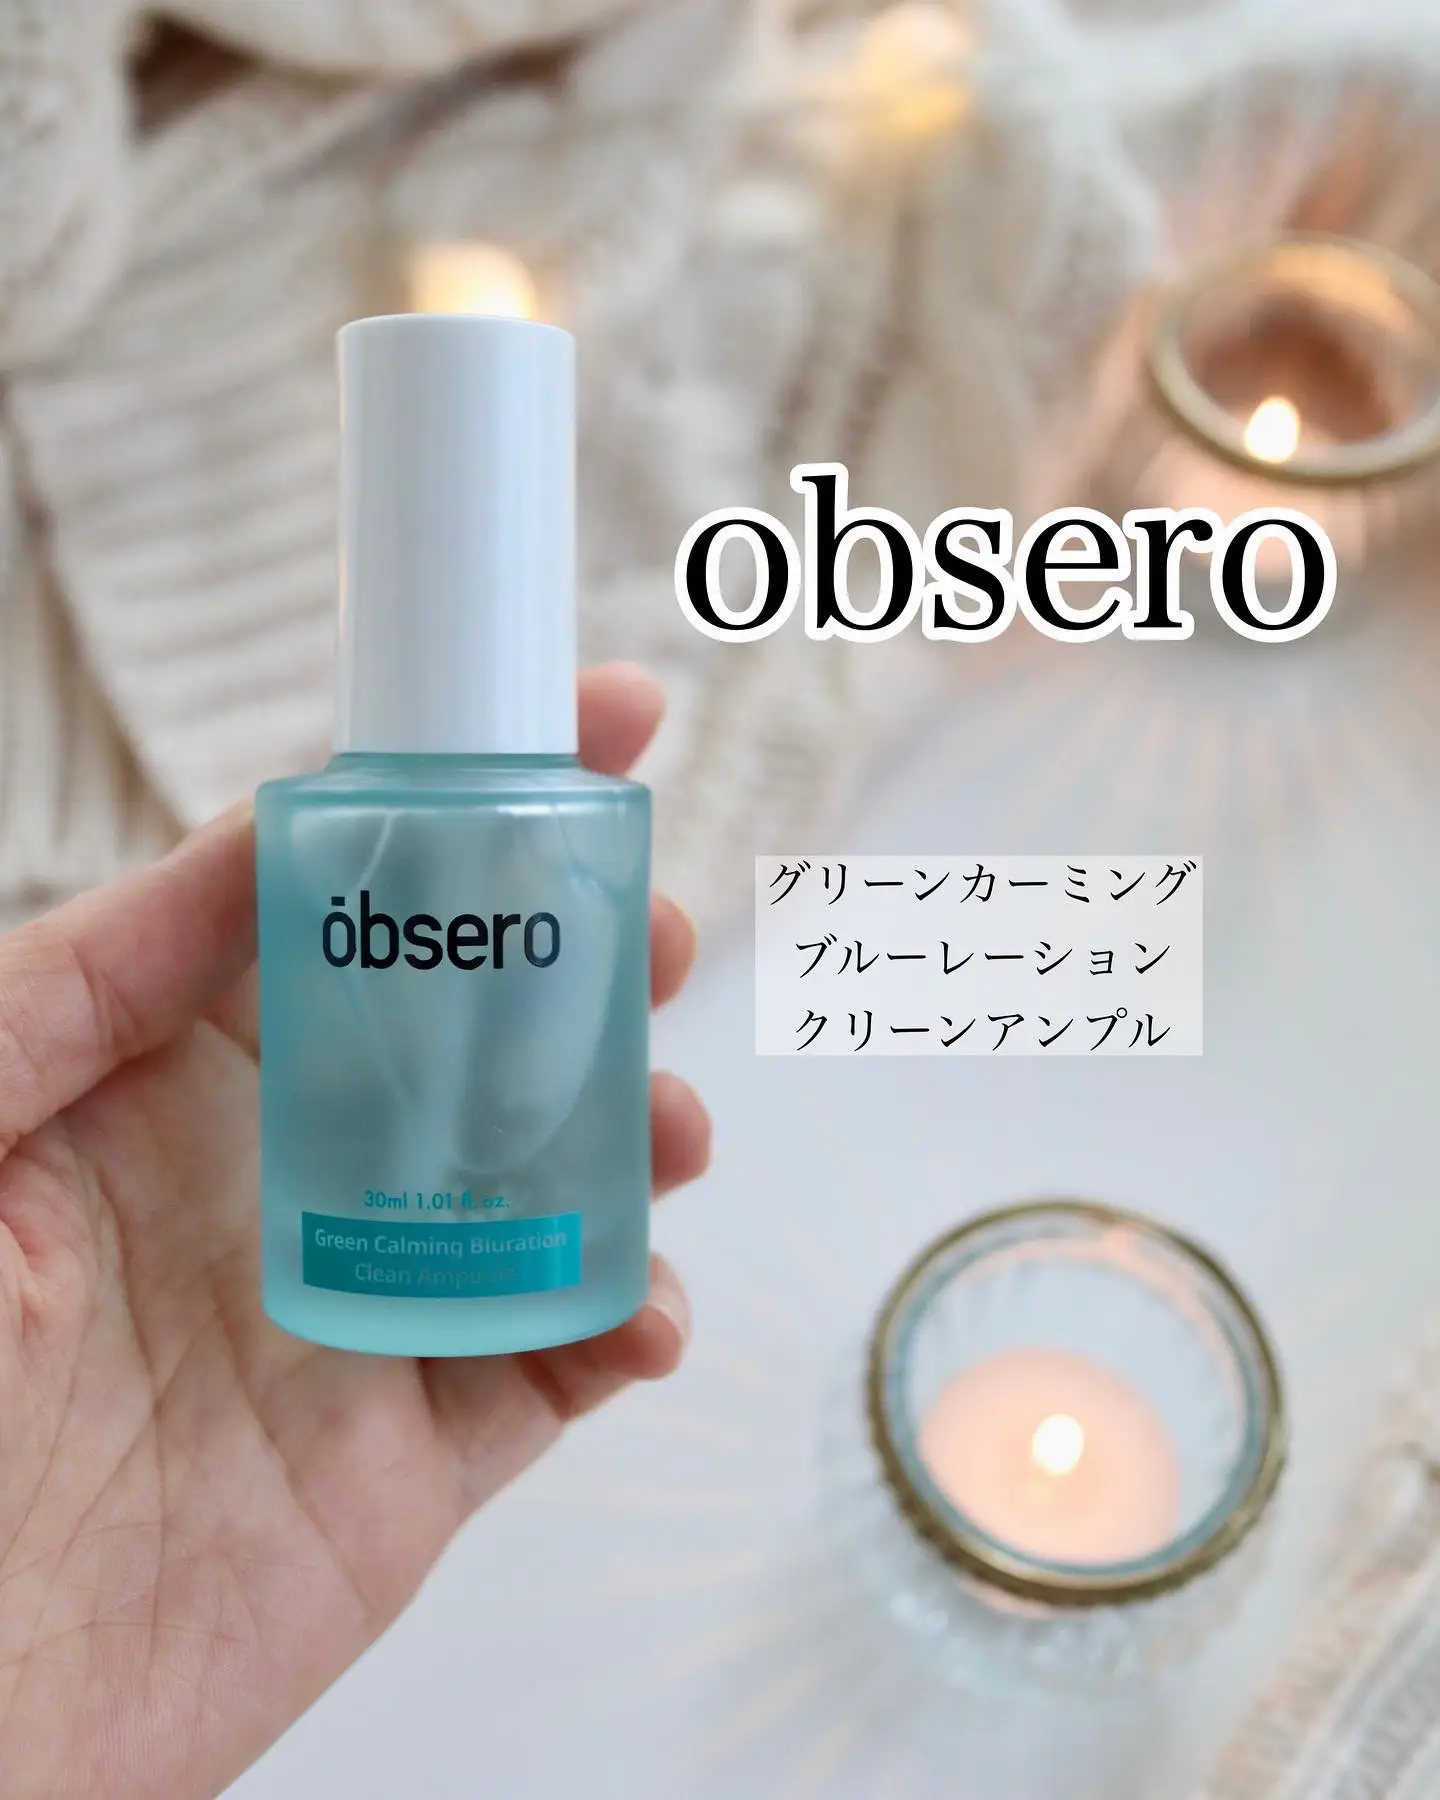 obsero オブセロ グリーンカーミングブルーレーション 3点セット